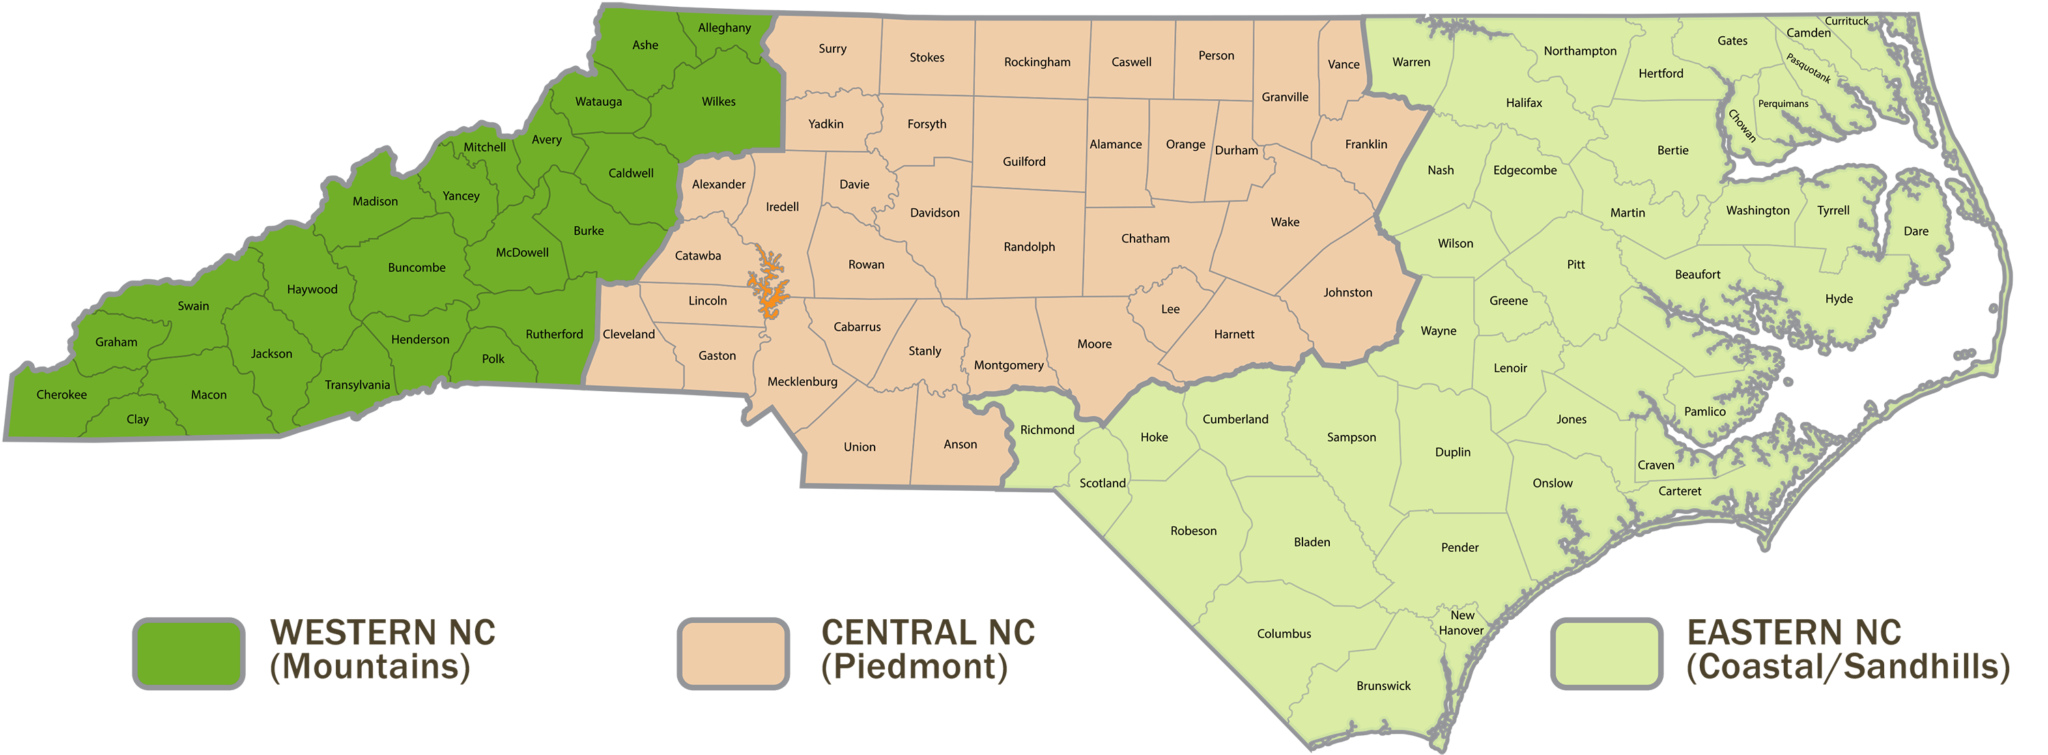 North Carolina regions of eminent domain cases